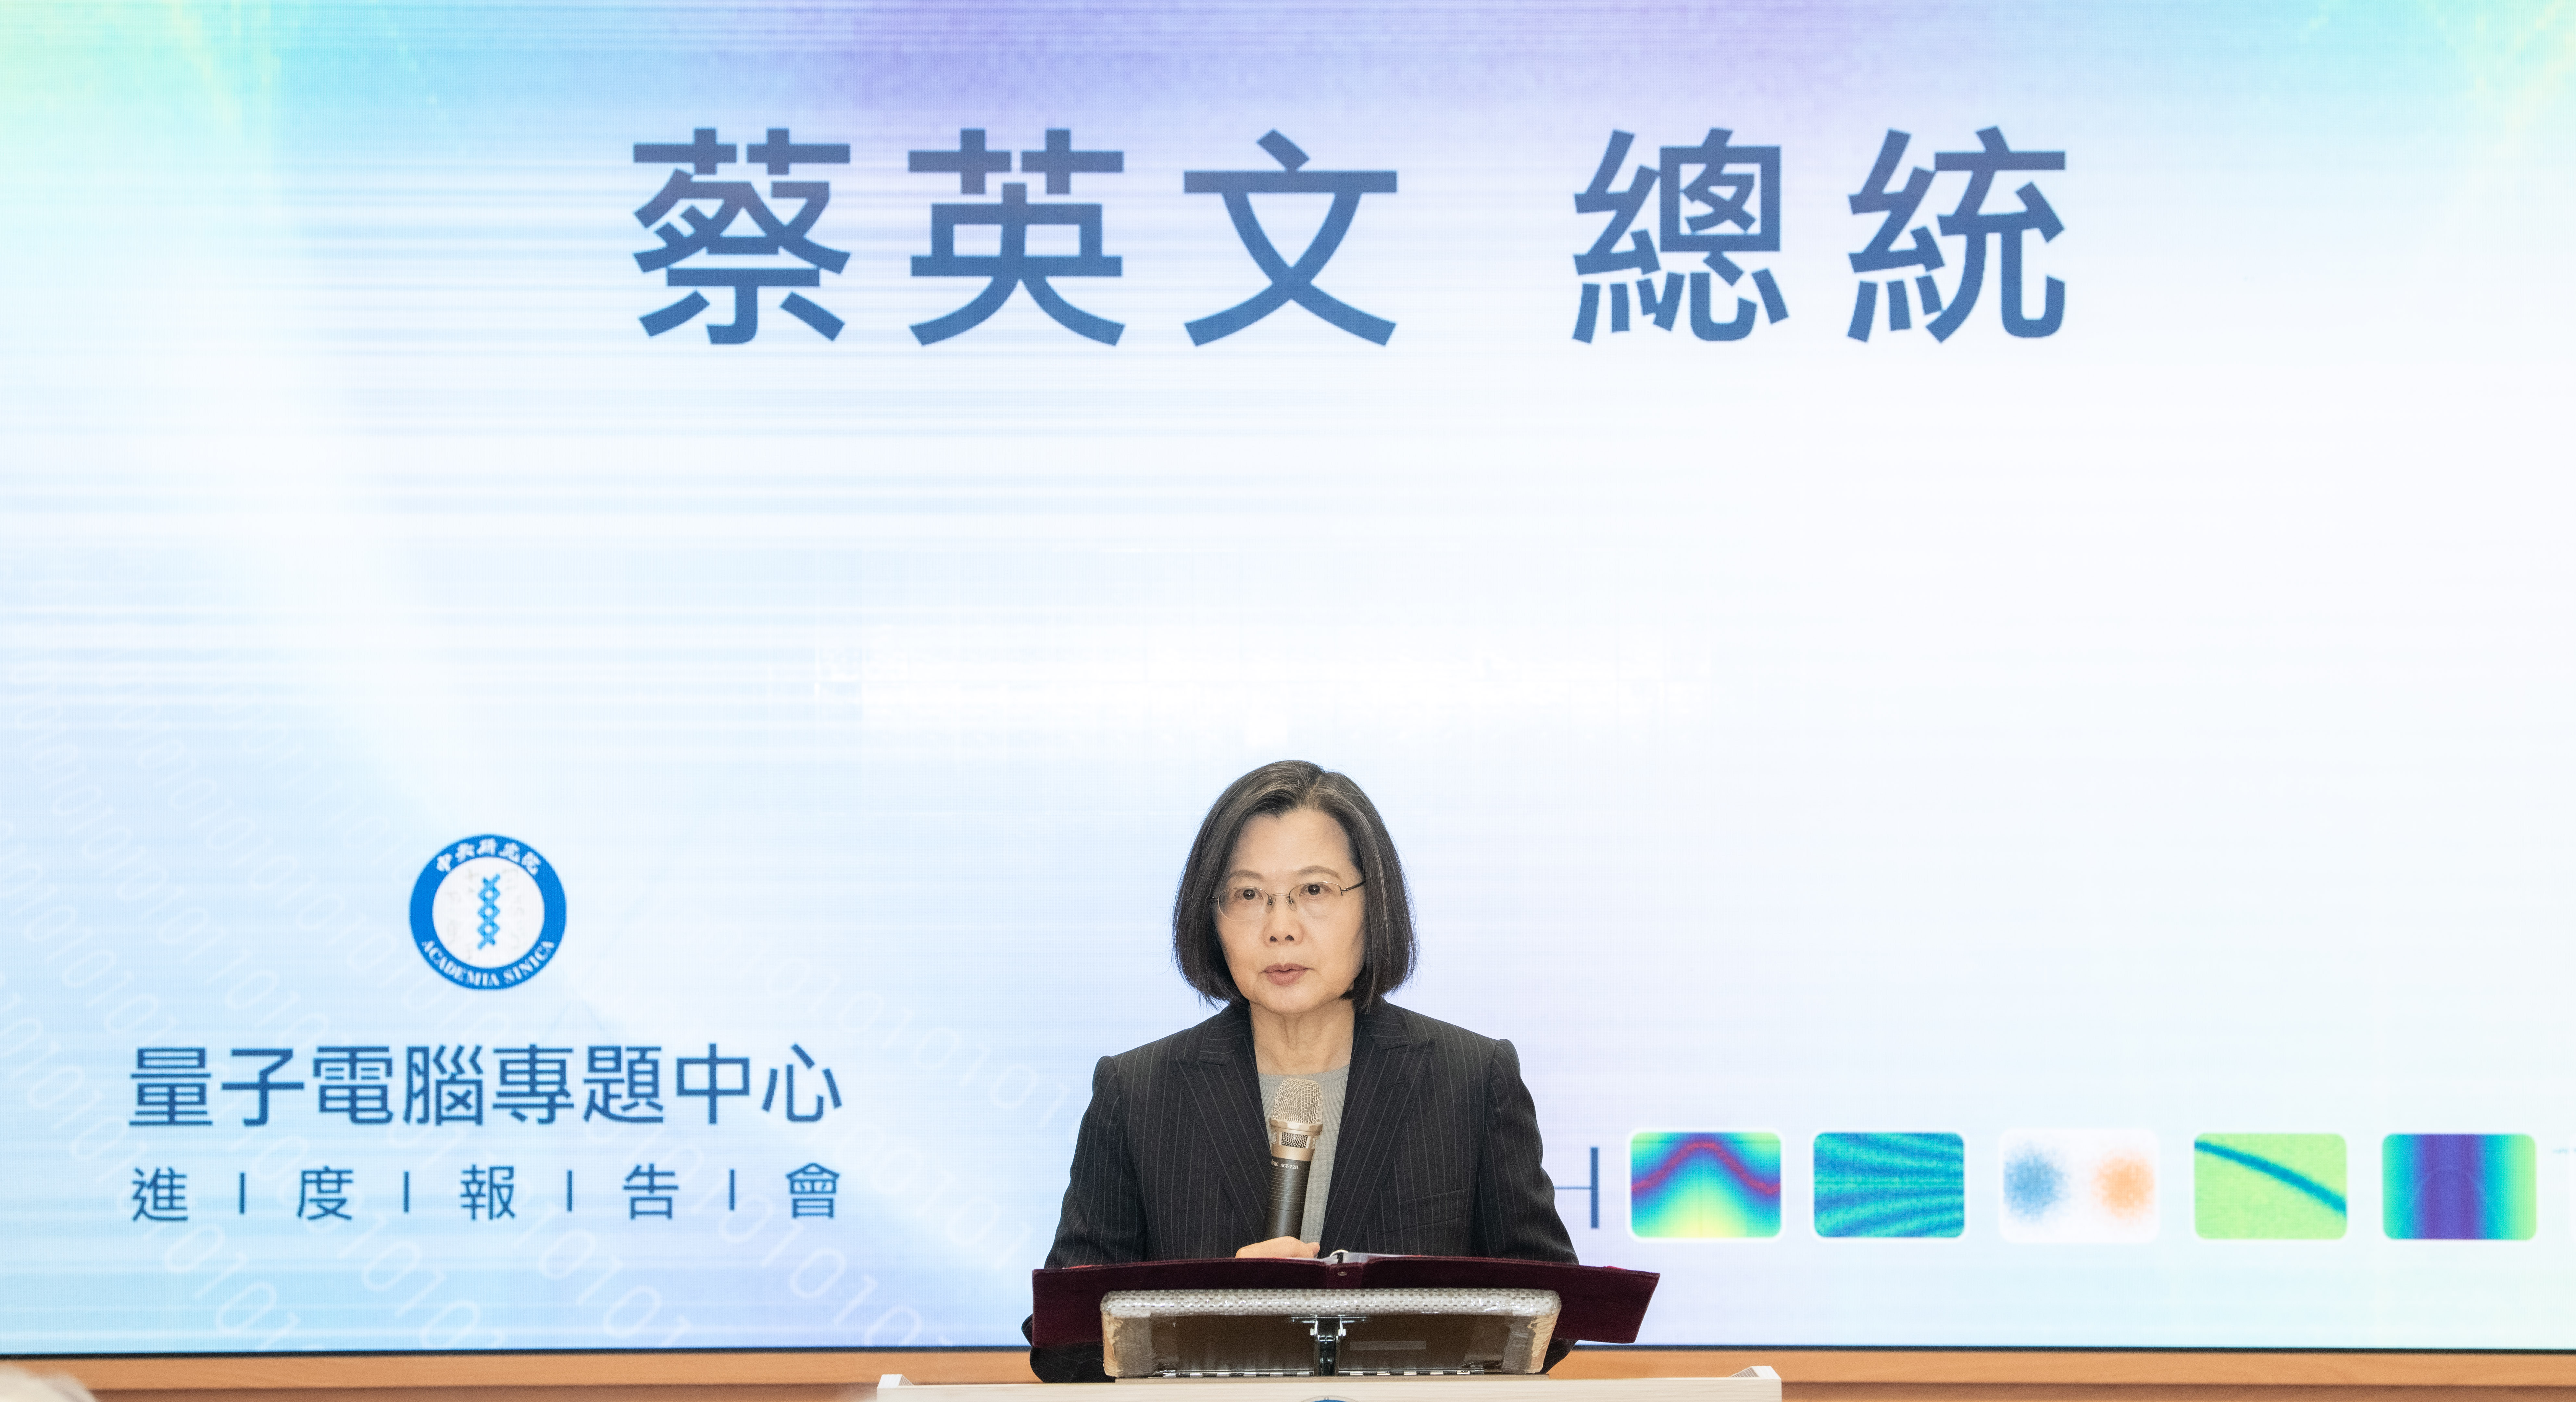 President Ing-wen Tsai